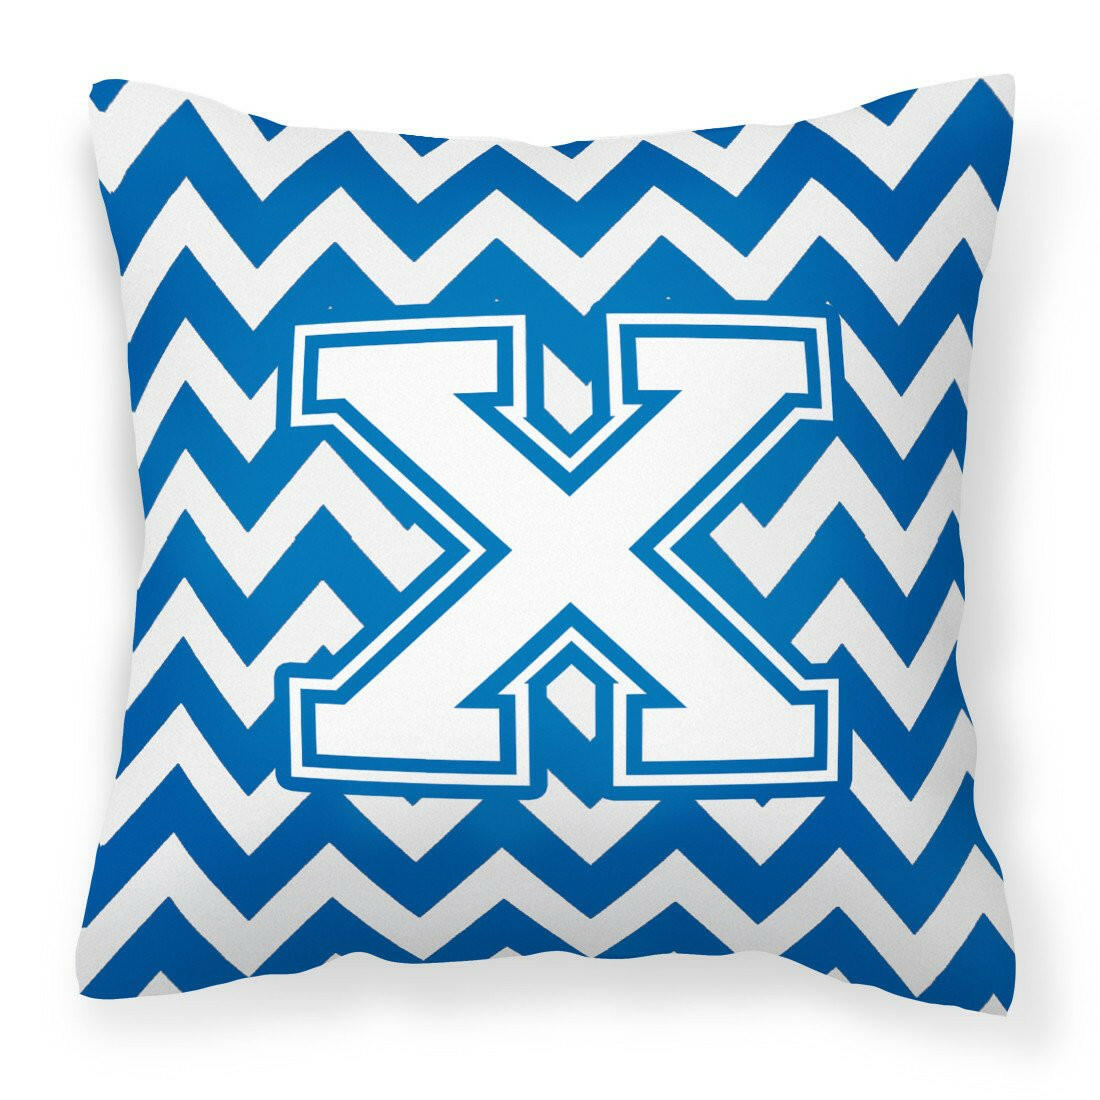 Letter X Chevron Blue and White Fabric Decorative Pillow CJ1045-XPW1414 by Caroline's Treasures